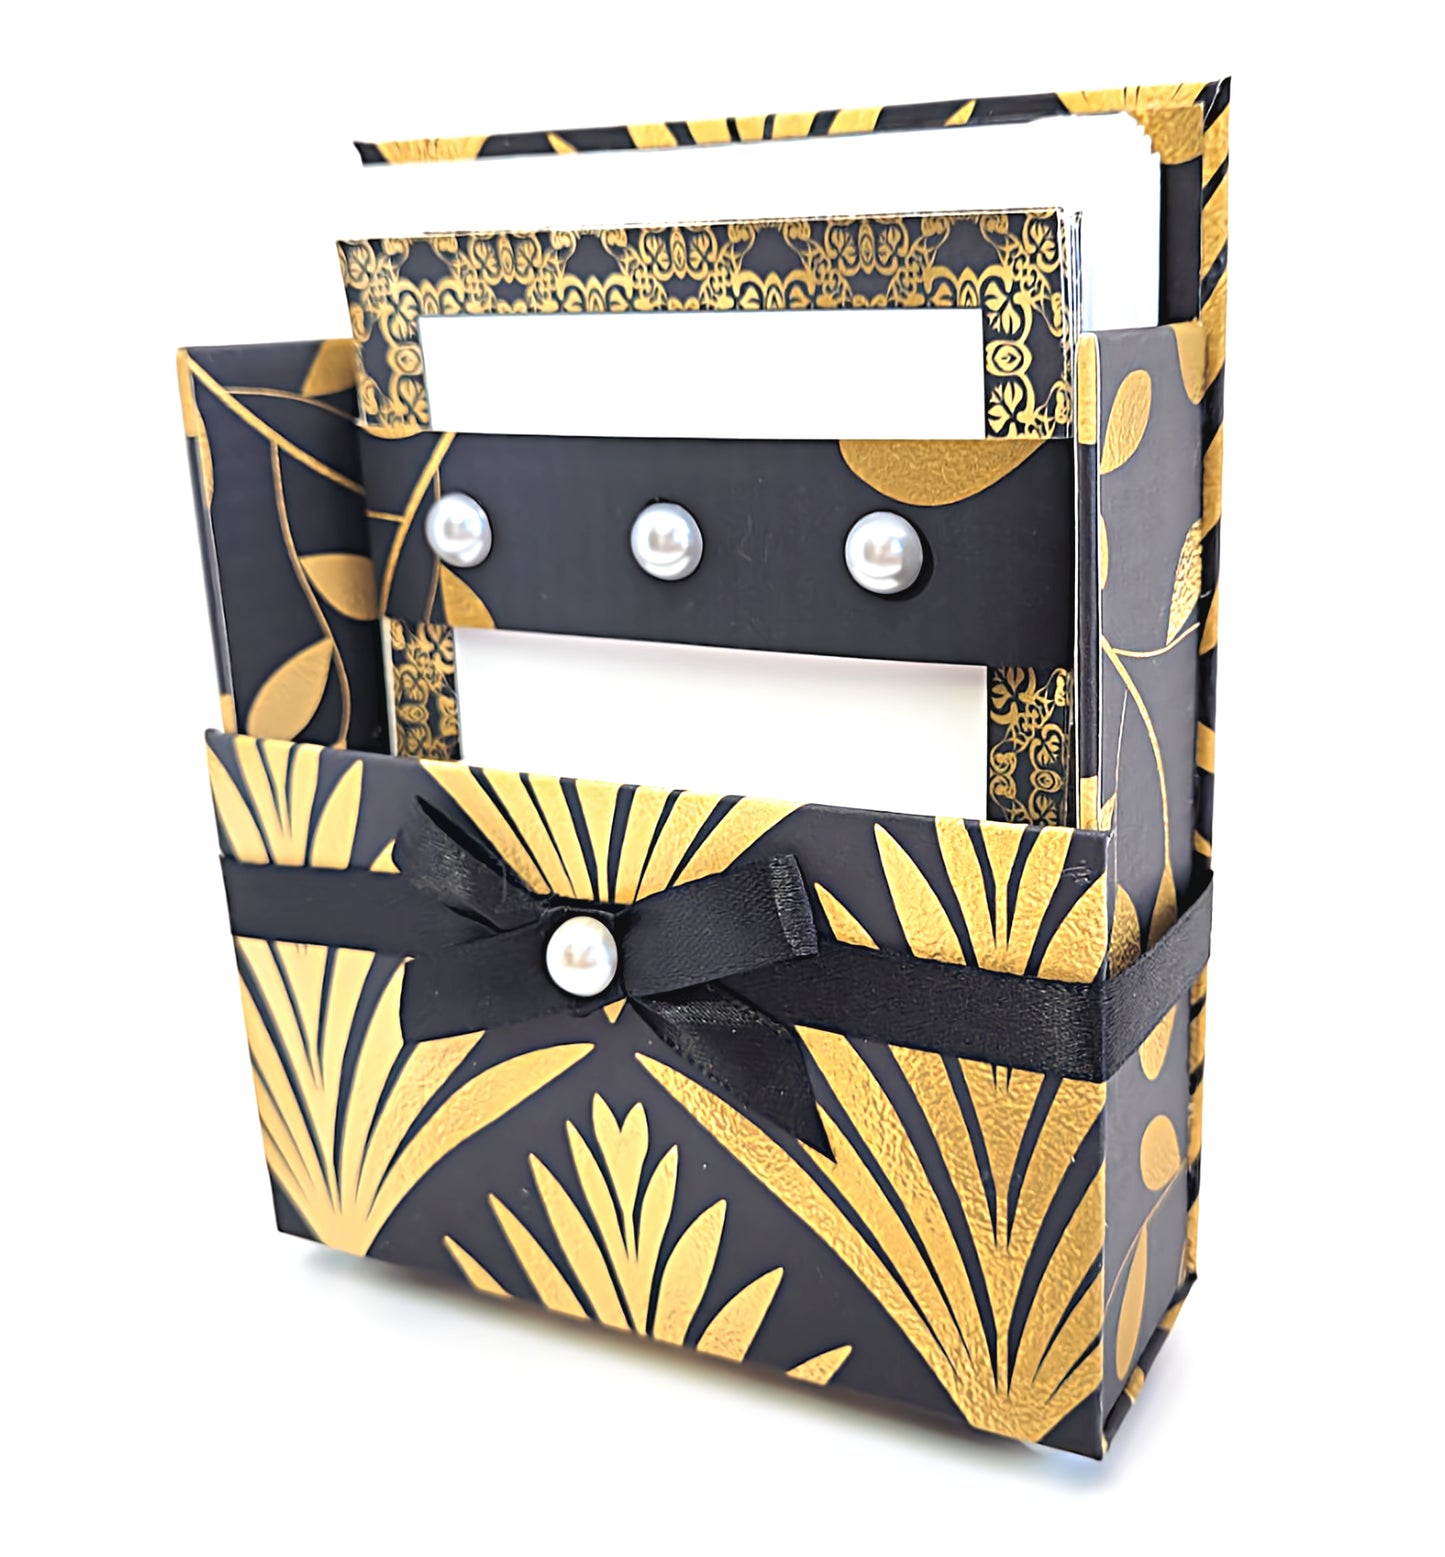 42-Pc Stationery For Him Gift Box Set w/Reusable Desktop Organizer Box and Gold Pen - Black & Gold Geometric - Chic Brico